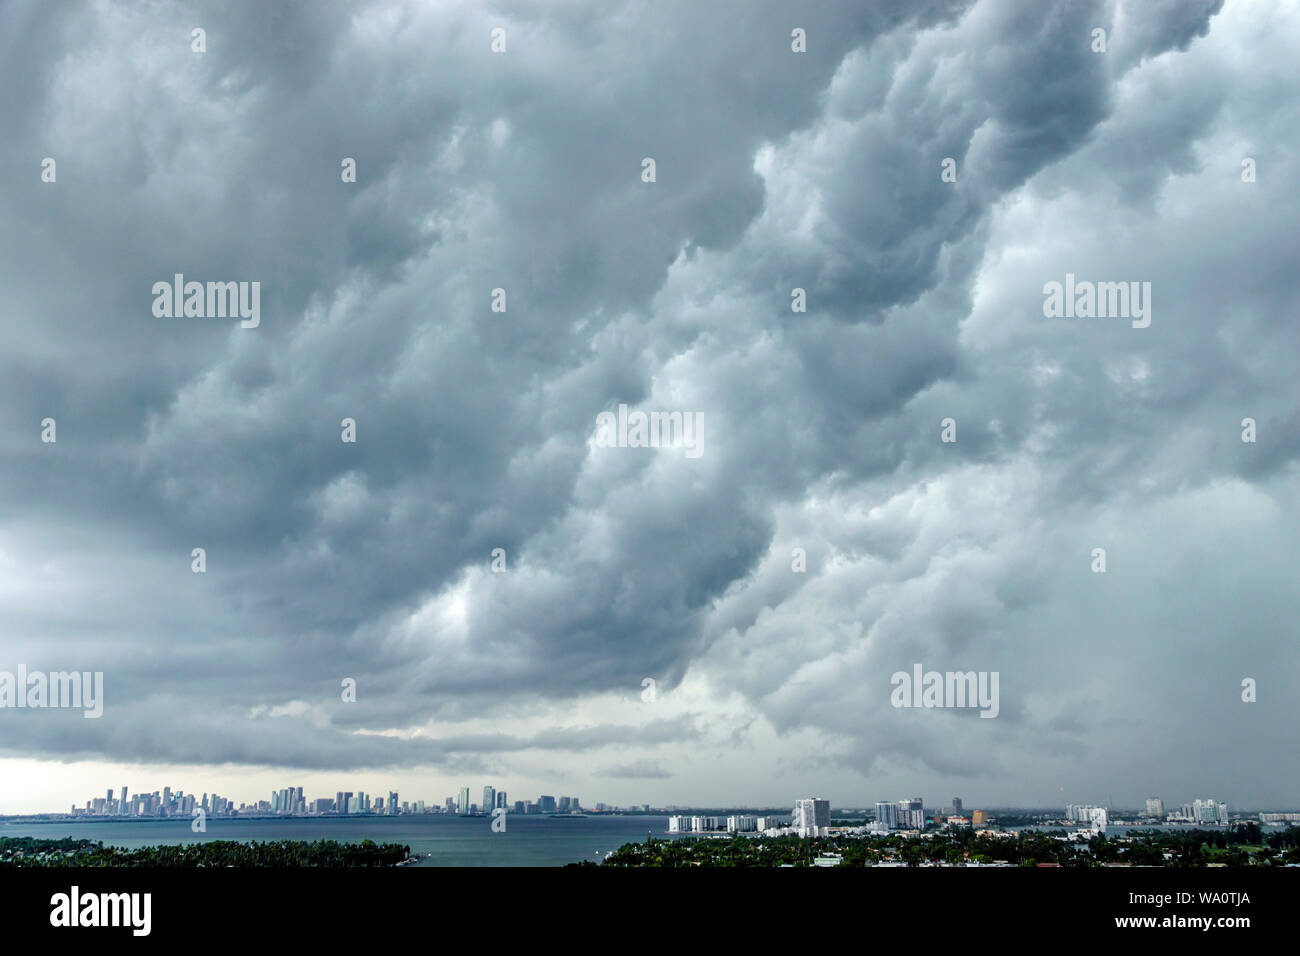 Miami Beach Florida,city skyline,clouds weather sky,storm clouds gathering,rain rainclouds,FL190731027 Stock Photo